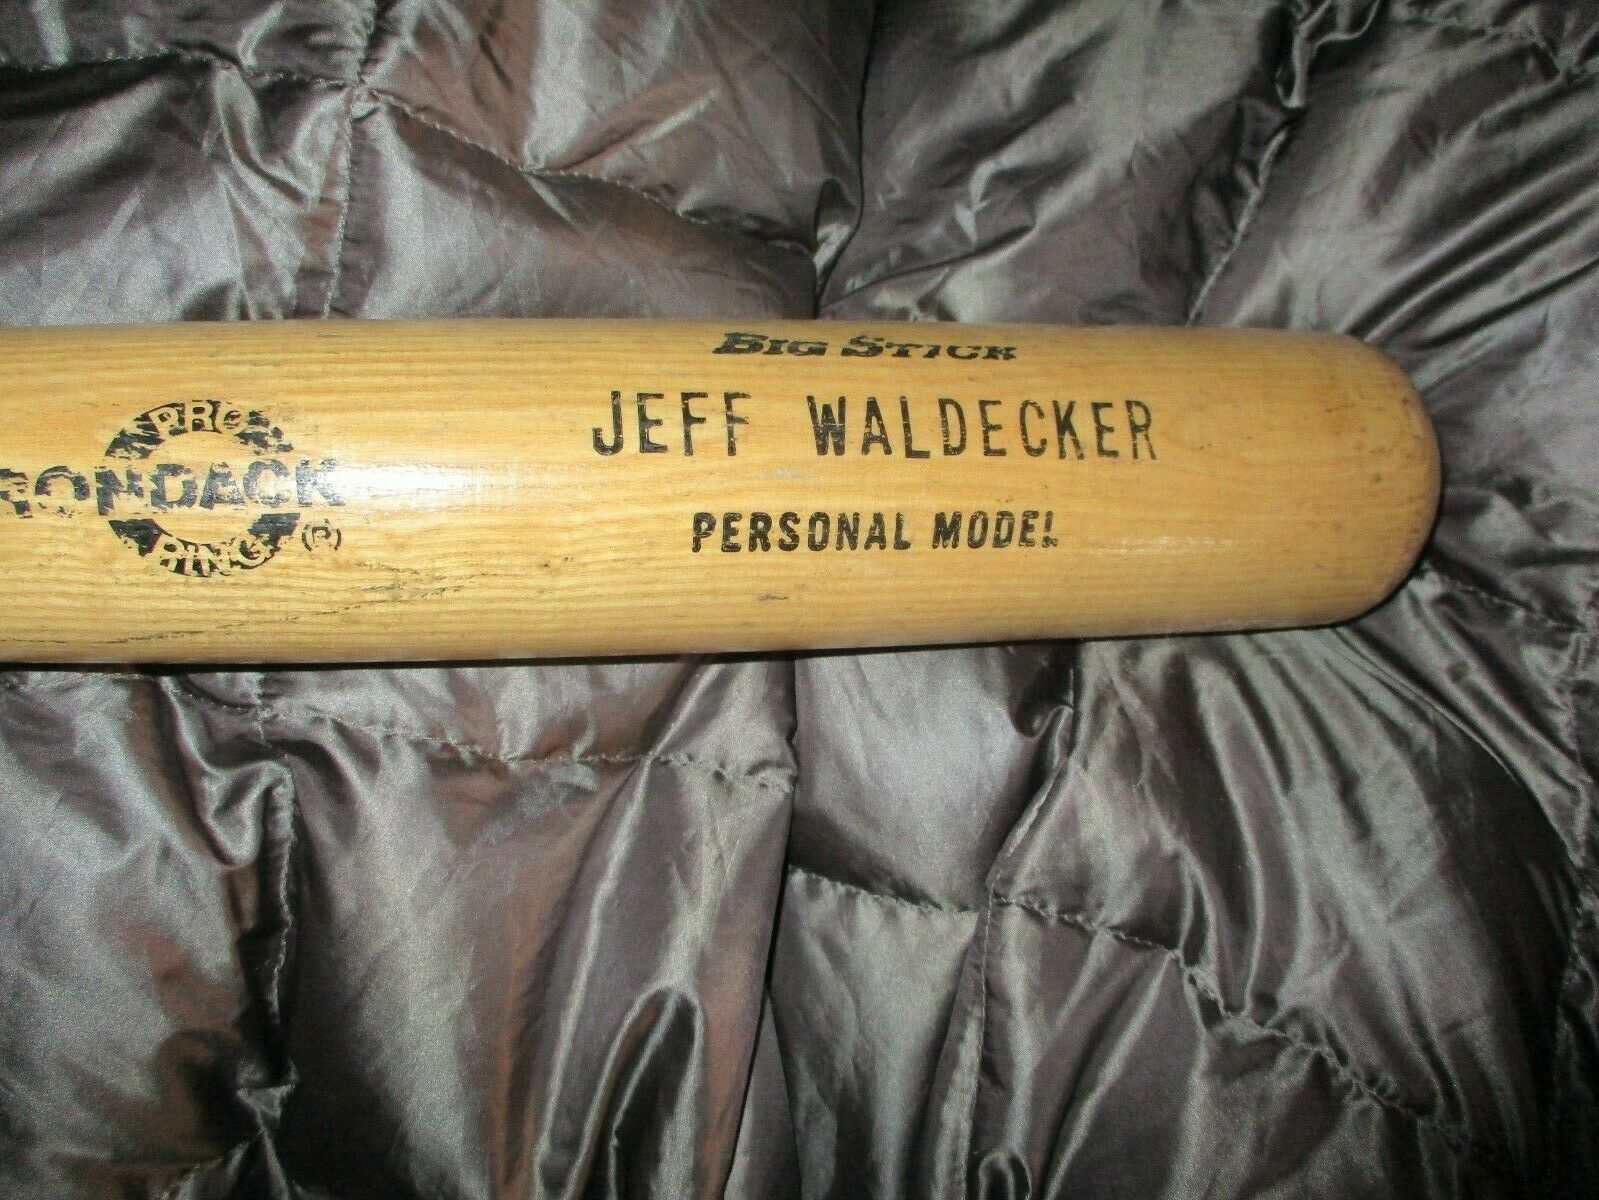 Jeff Waldecker Adirondack Pro Ring Ash Big Stick Personal Model 33" Bat